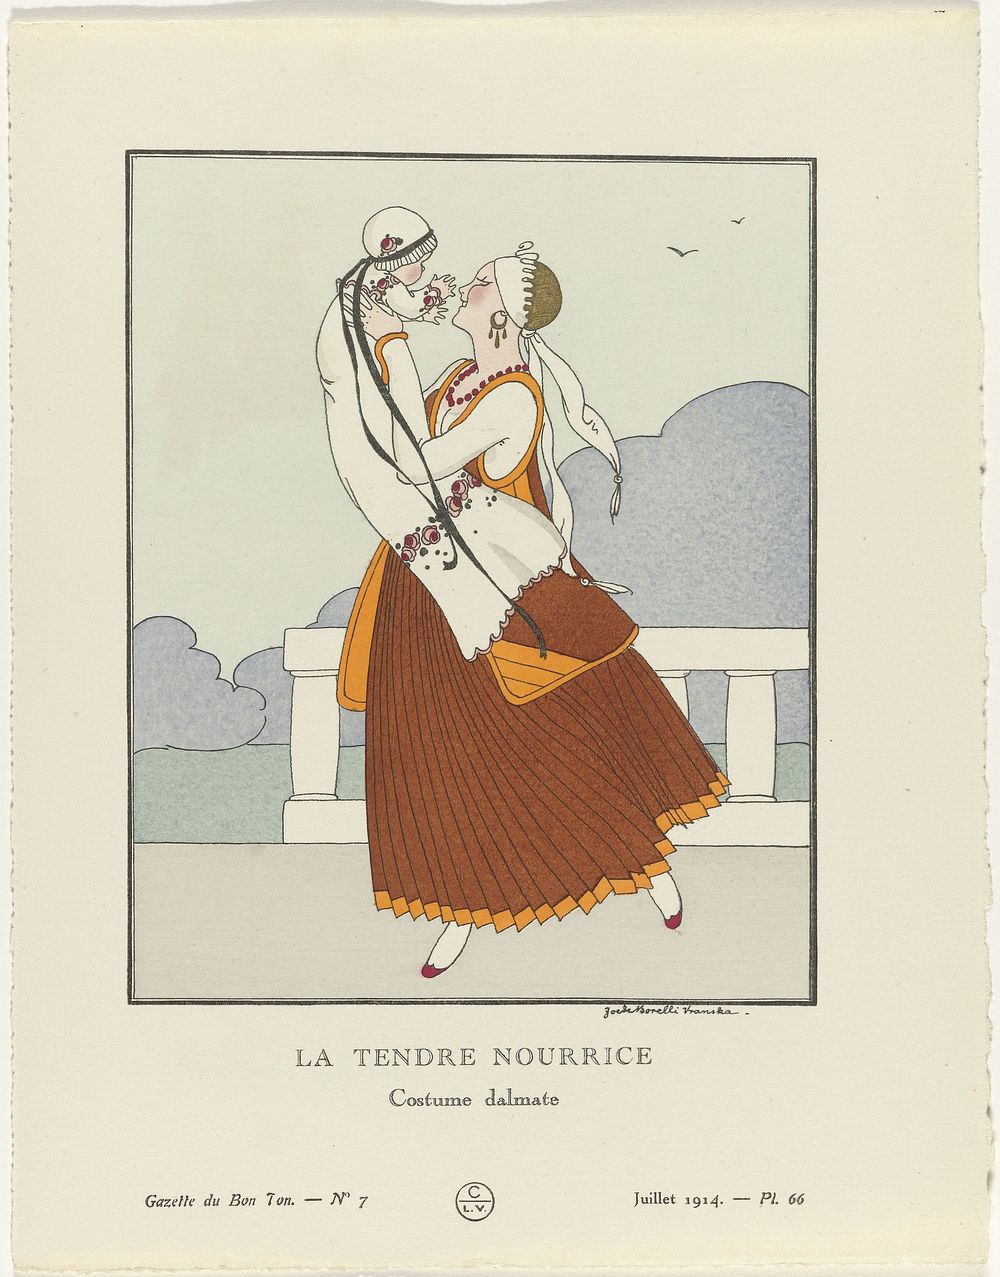 Gazette du Bon Ton, 1914 - No. 7, Pl. 66: La tendre nourrice / Costume dalmate (1914) by Zoë de Borelli Vranska, anonymous…